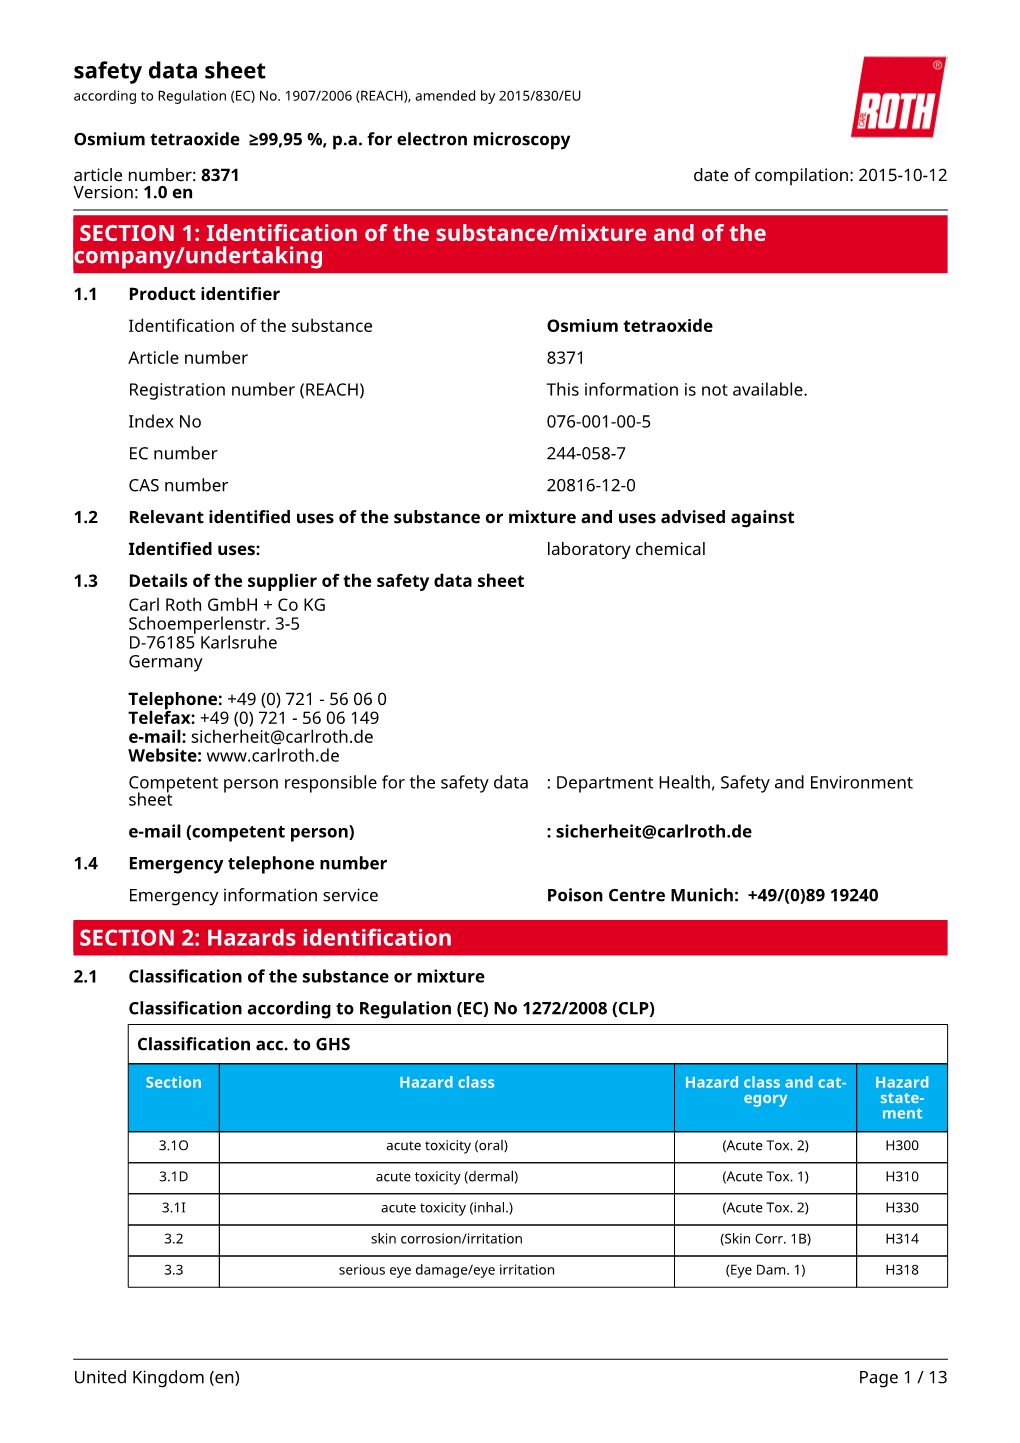 Safety Data Sheet: Osmium Tetraoxide